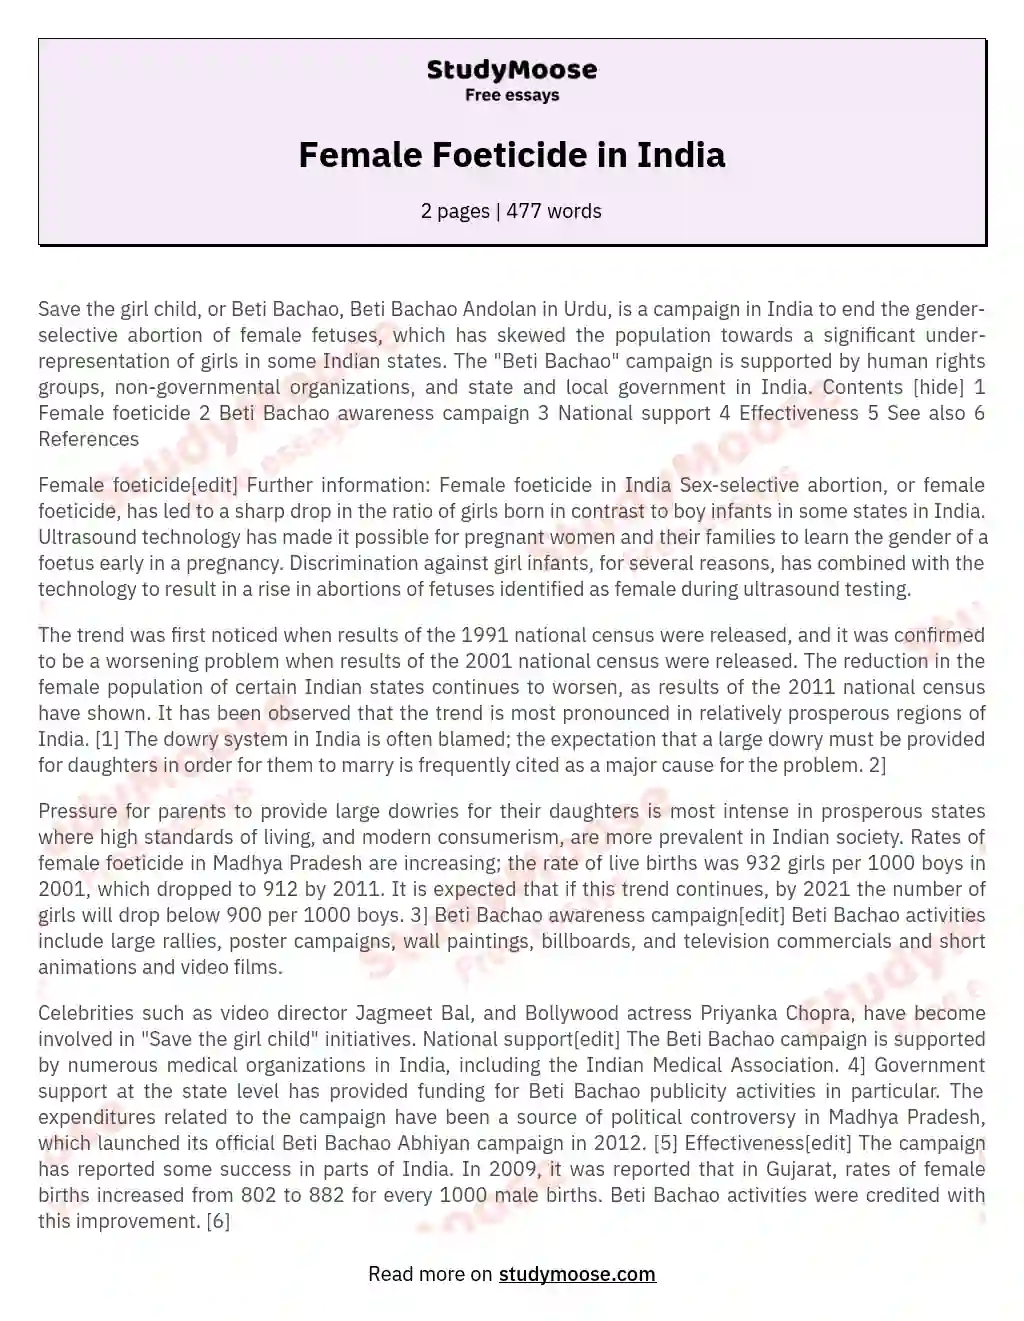 Female Foeticide in India essay